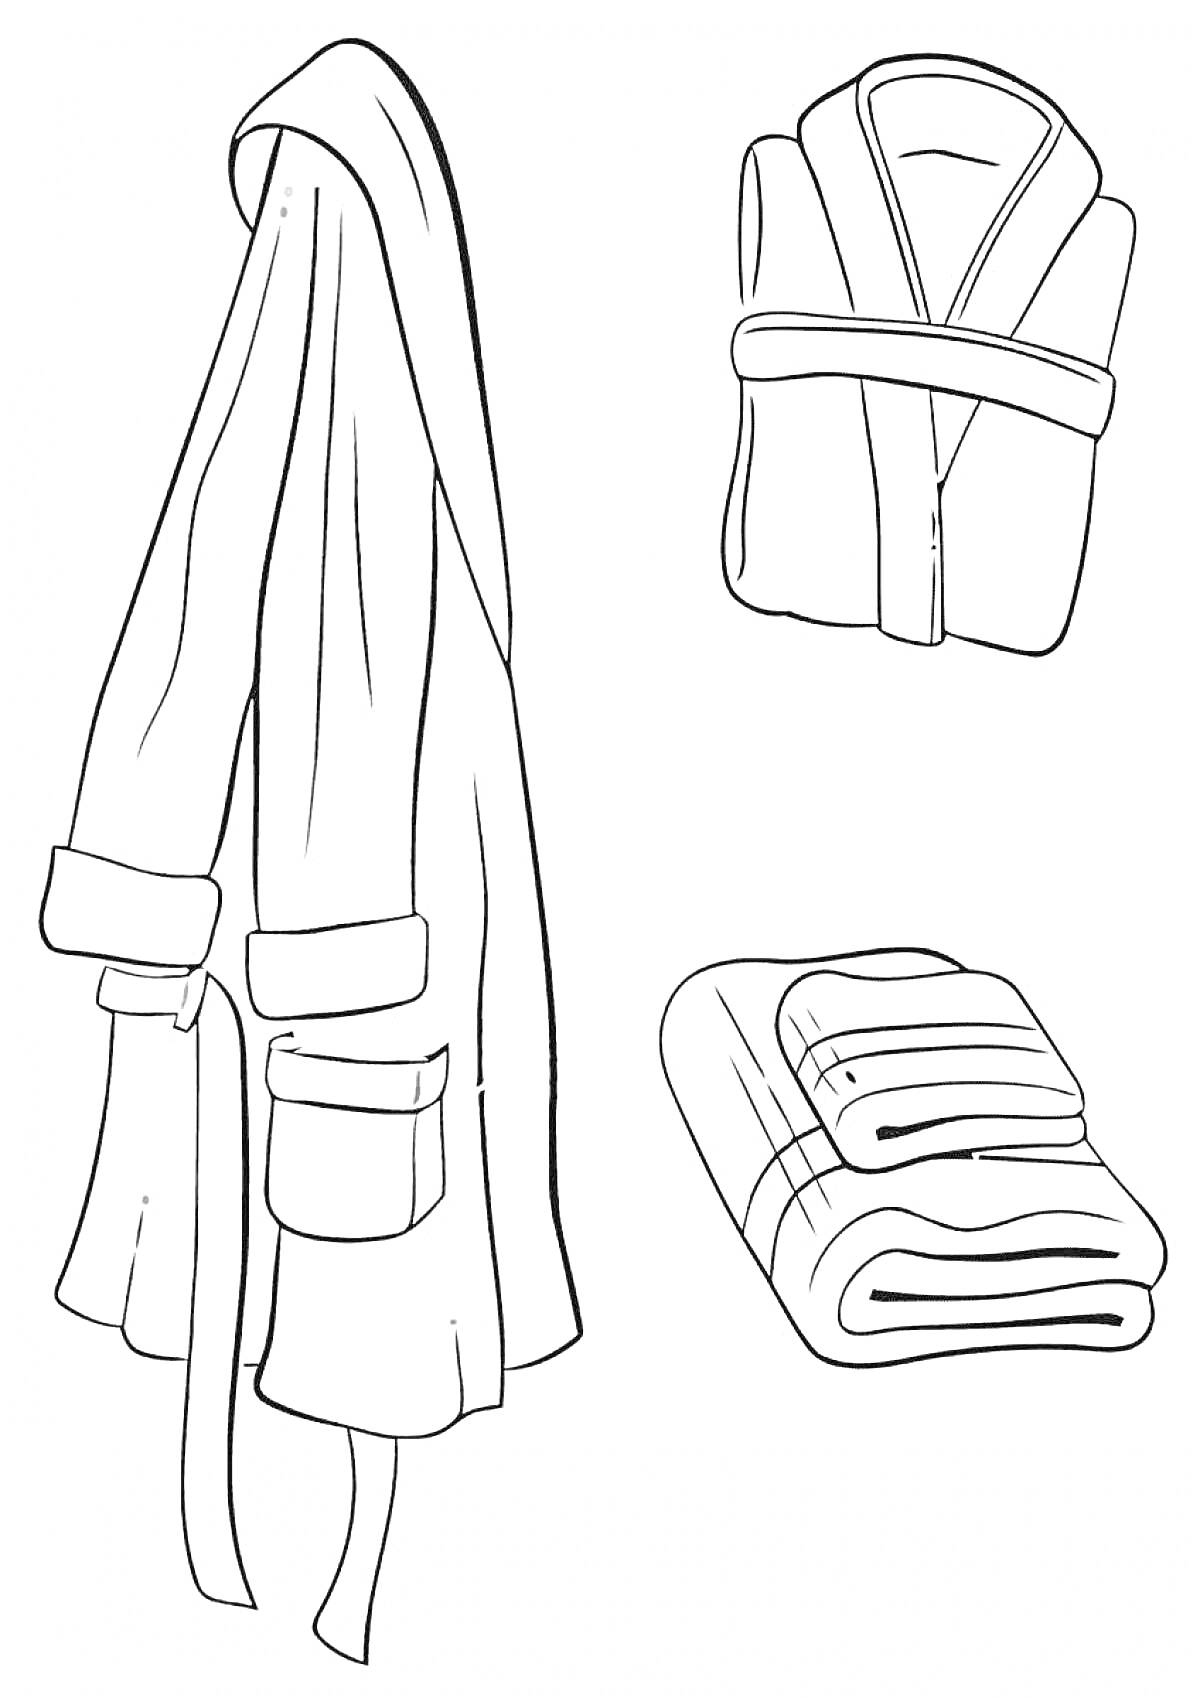 Халат, сложенный халат, сложенные полотенца